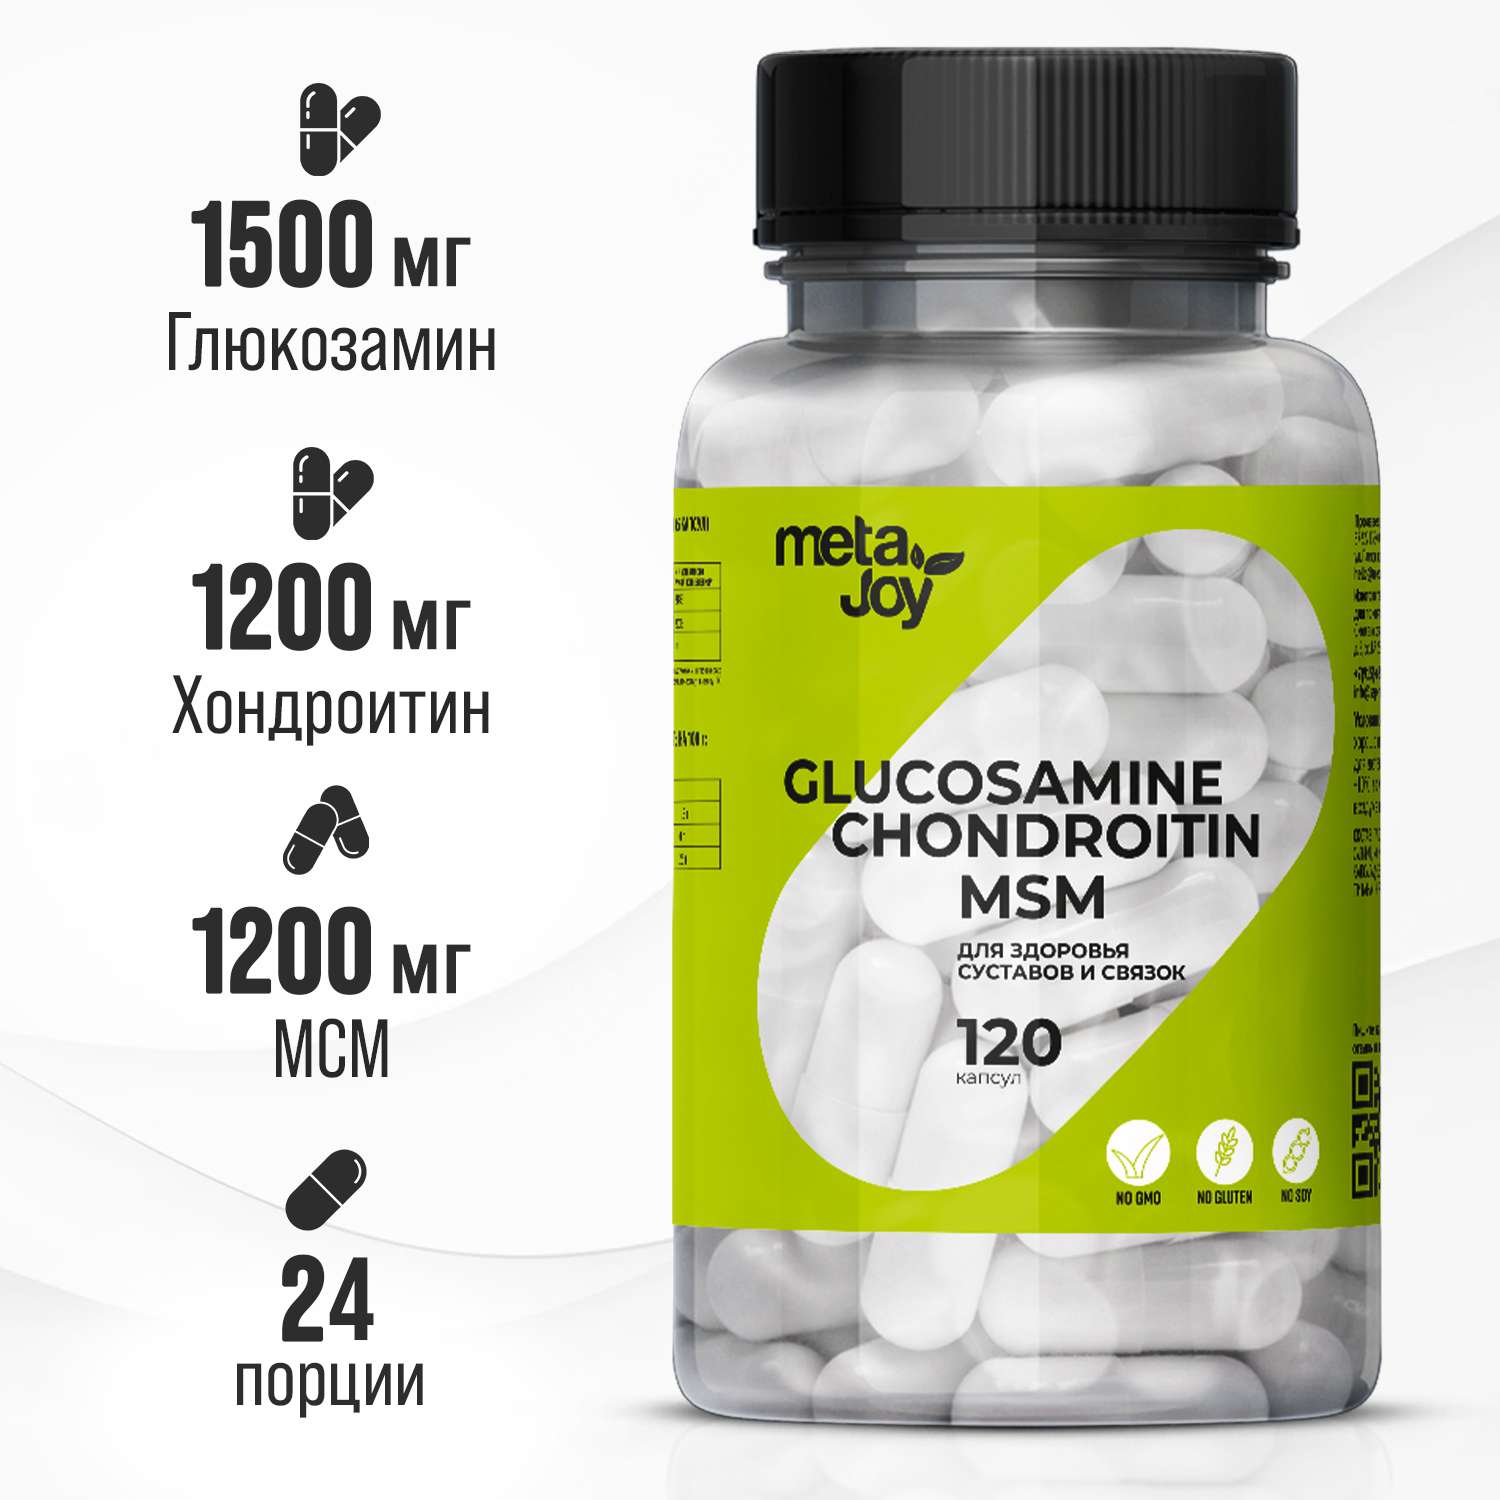 Препарат для суставов и связок MetaJoy Глюкозамин хондроитин МСМ 120 капсул - фото 1